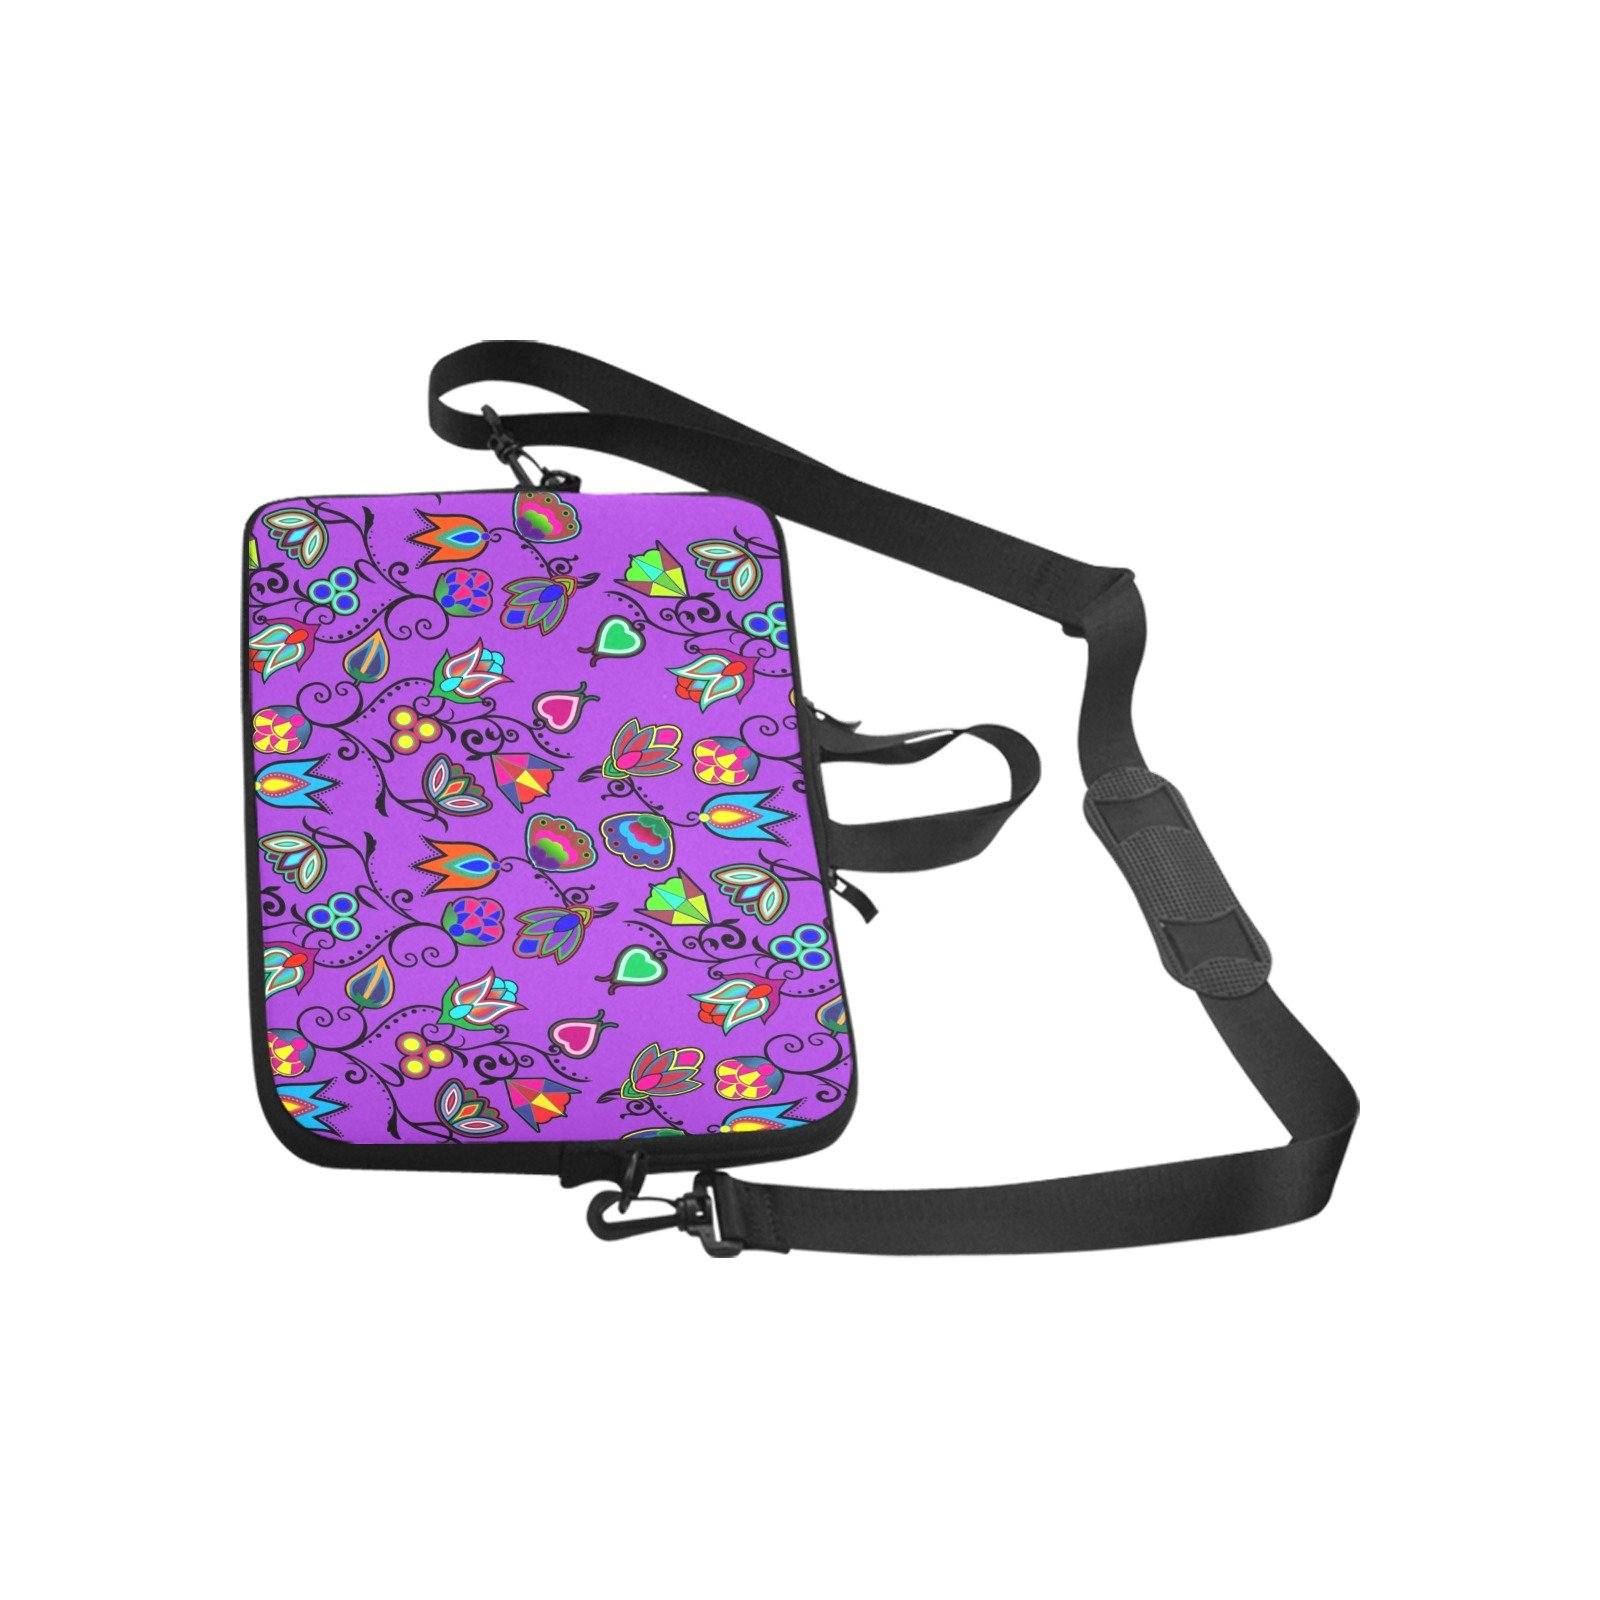 Indigenous Paisley Dark Orchid Laptop Handbags 14" bag e-joyer 